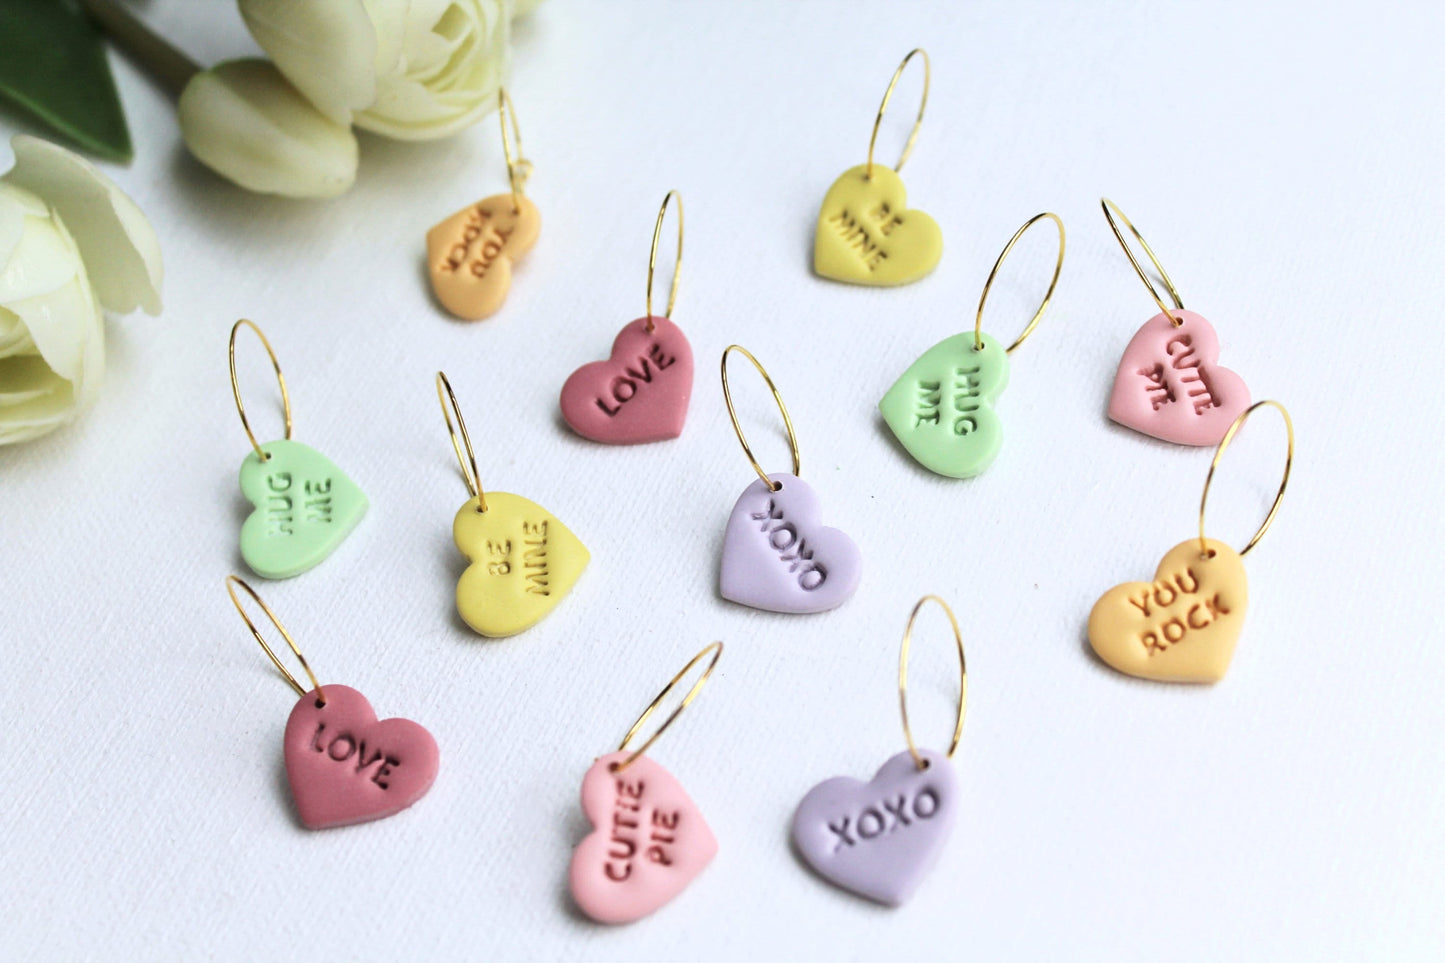 Valentine's Heart Earrings, Hoop Earrings, Conversation Hearts Earrings, Polymer Clay Earrings, Candy Earrings, Handmade, Gift for Her,Love